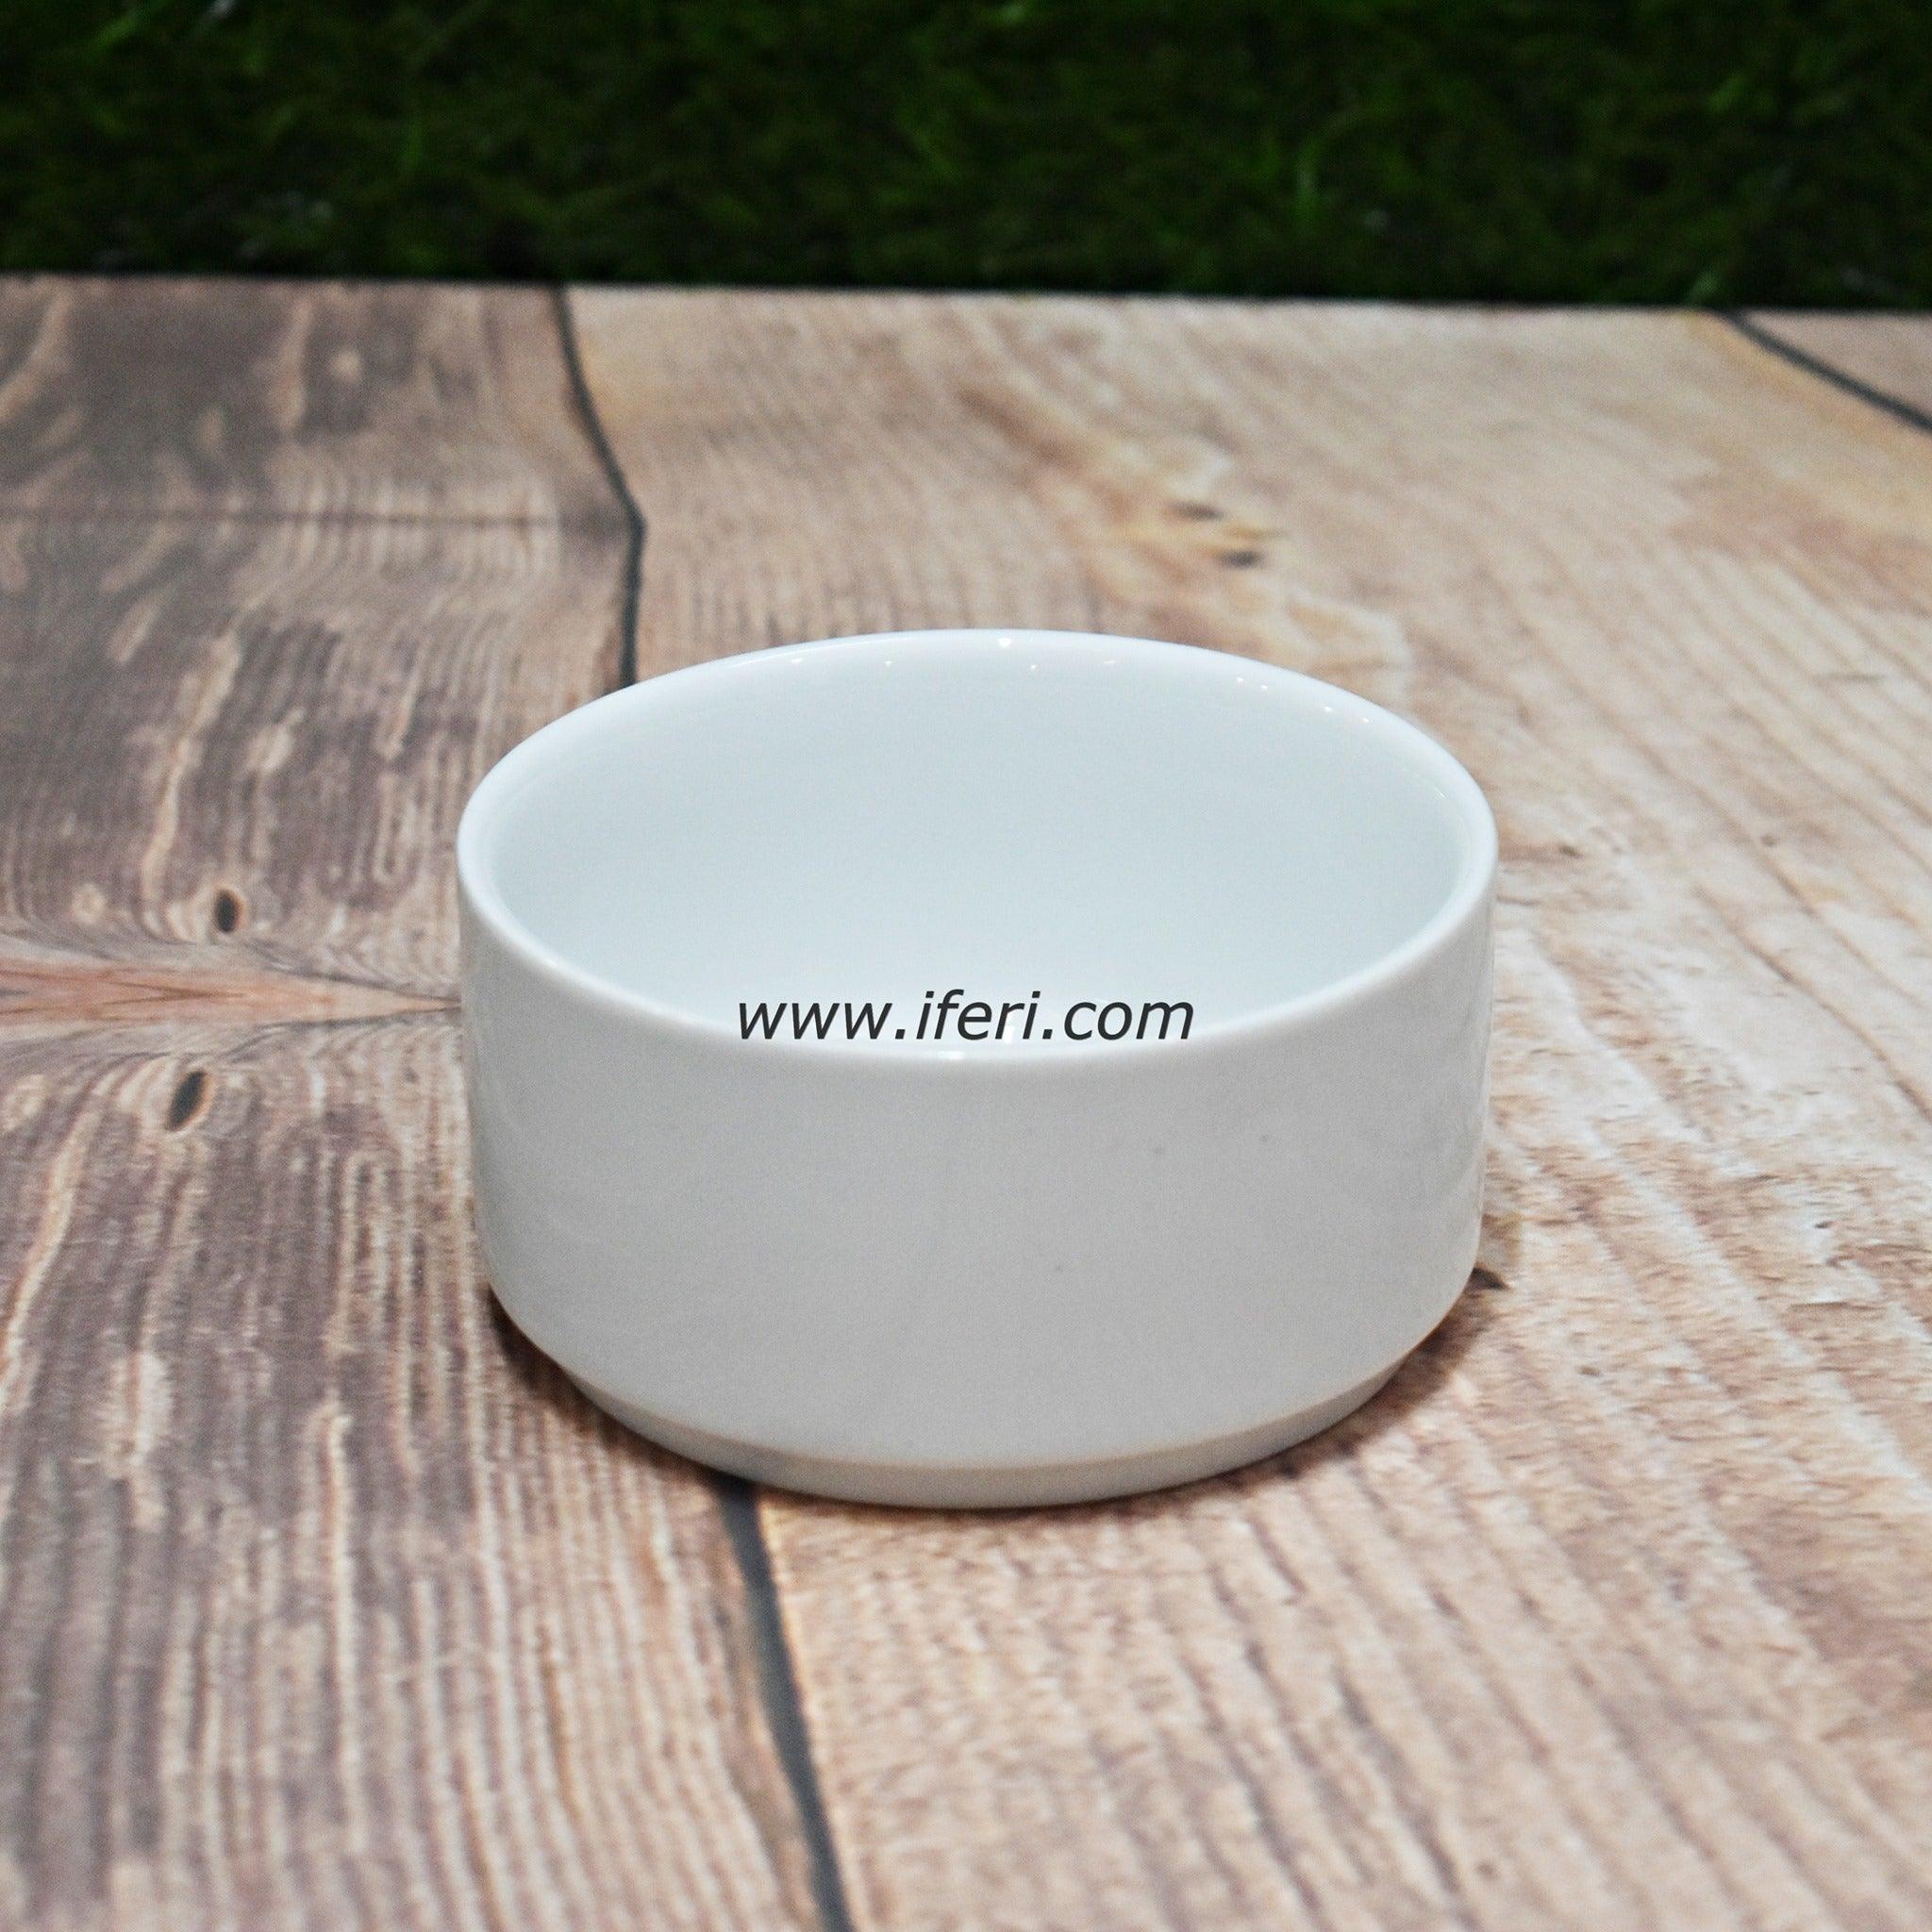 4 inch White Ceramic Soup Bowl SN4865 Price in Bangladesh - iferi.com